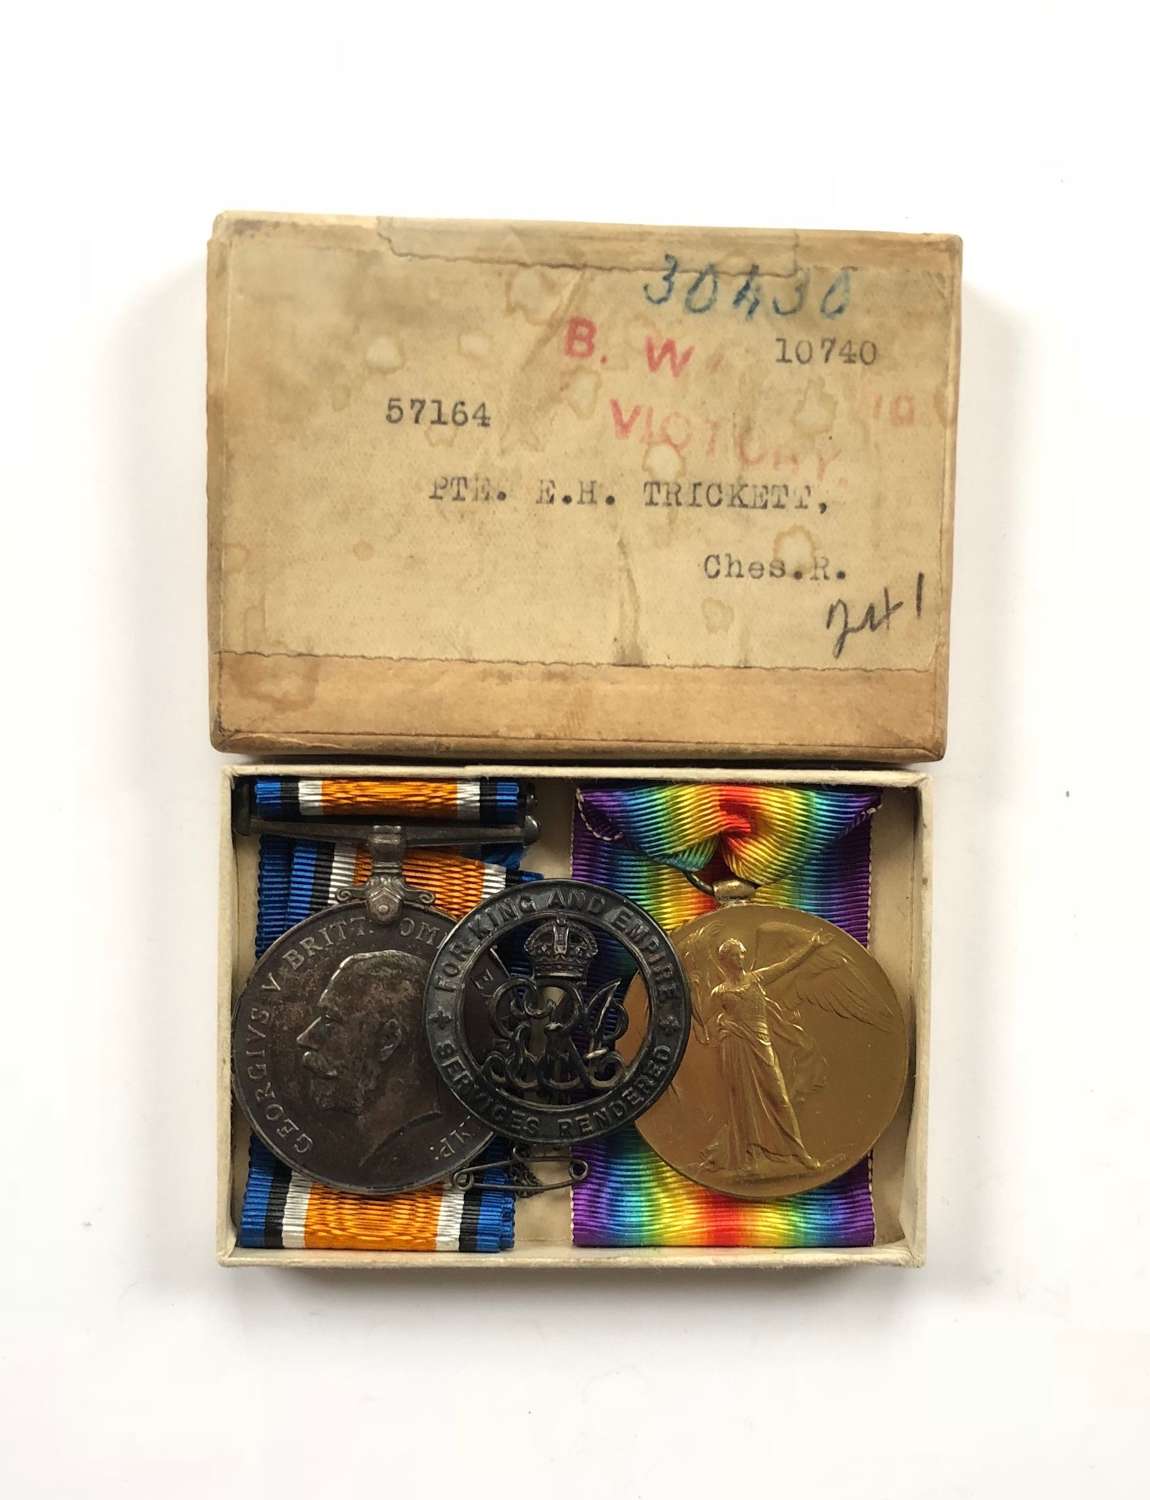 WW1 6th Bn Cheshire Regiment Medals & War Badge.